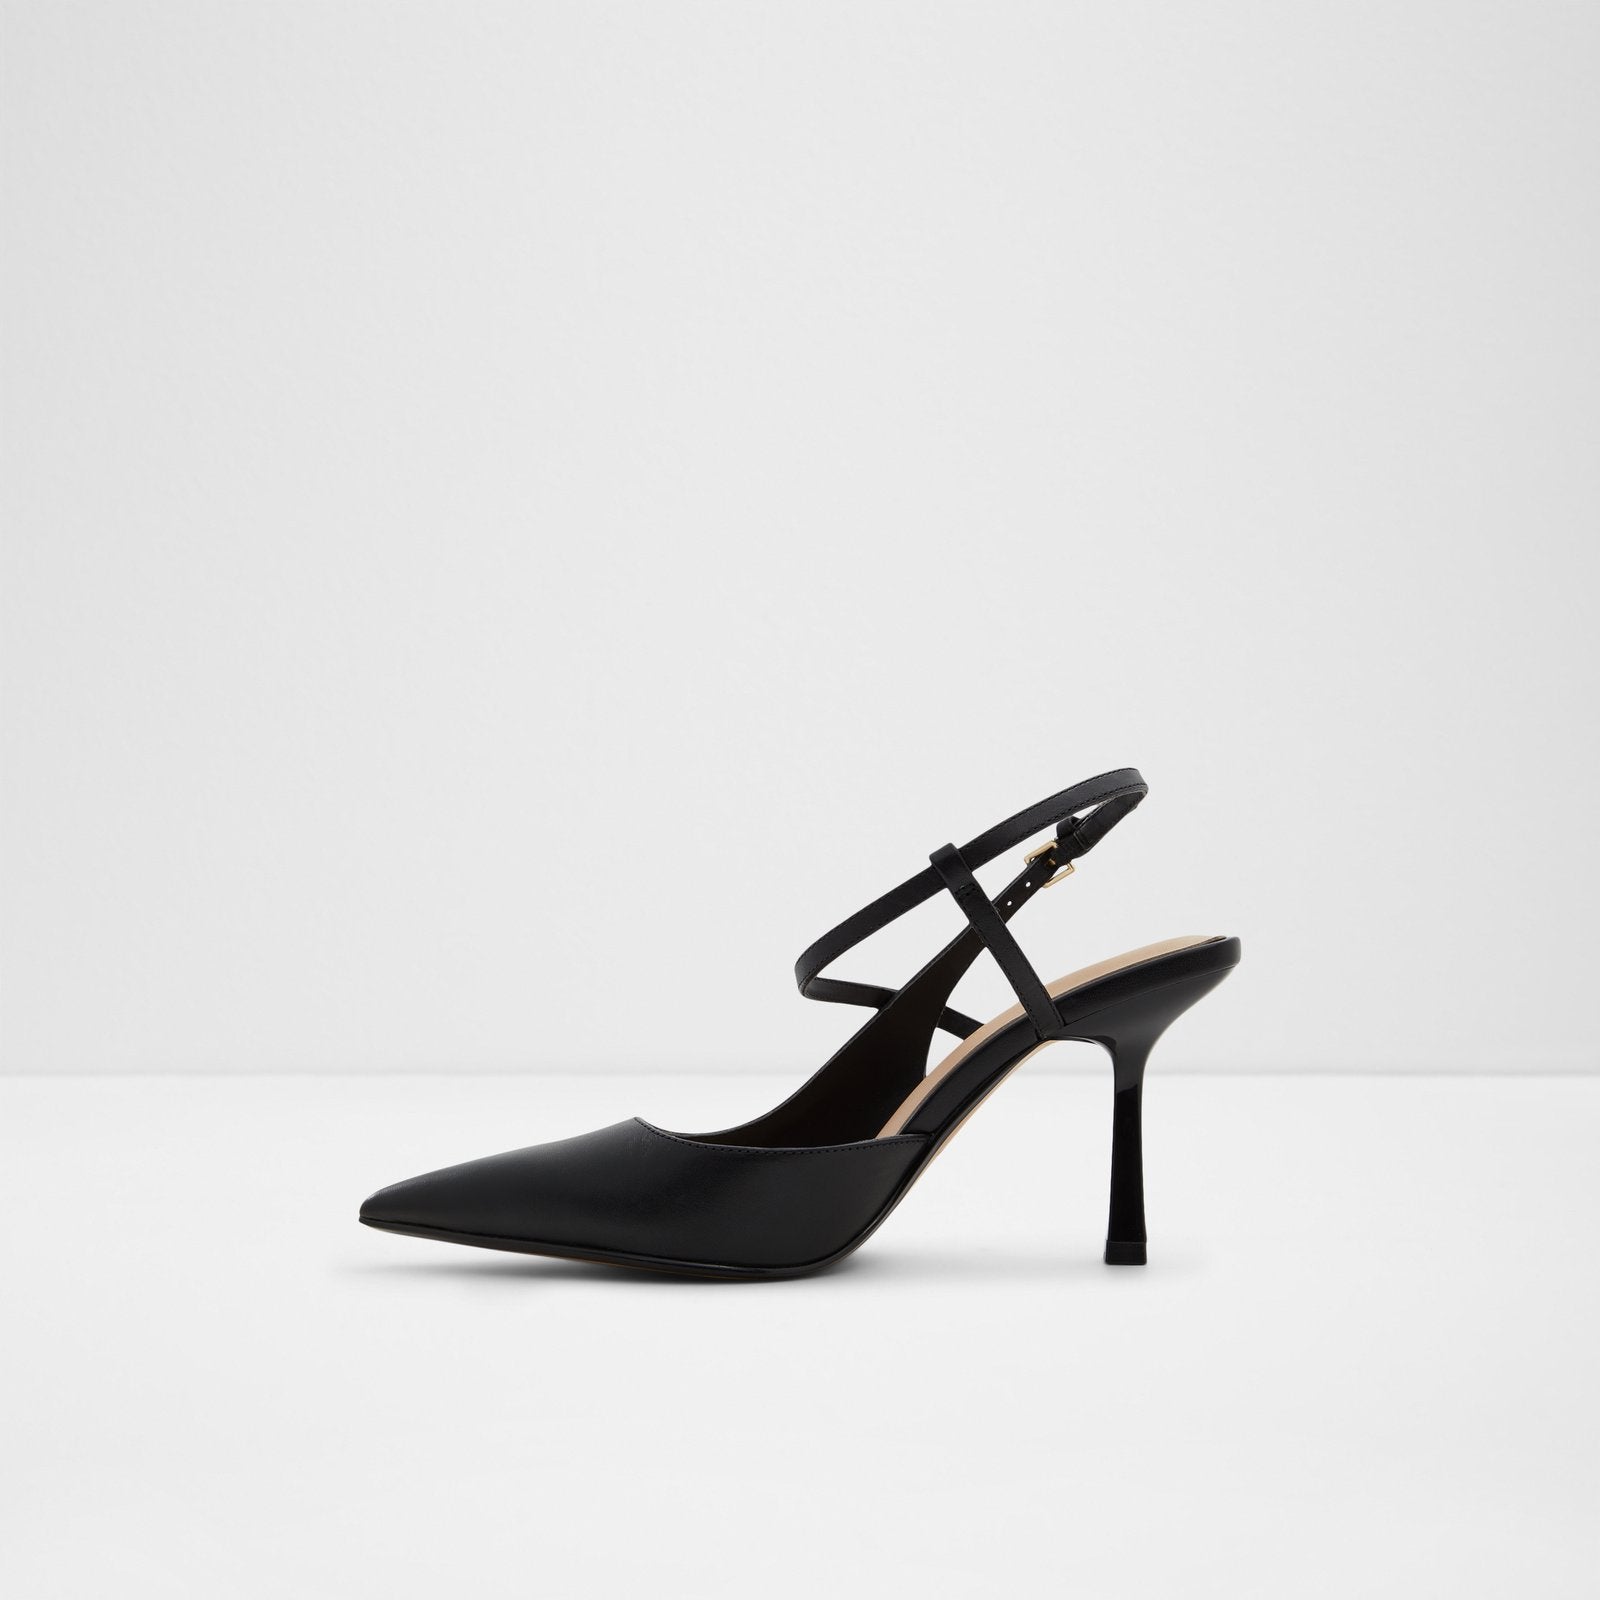 Brunette Women Shoes - Black - ALDO KSA